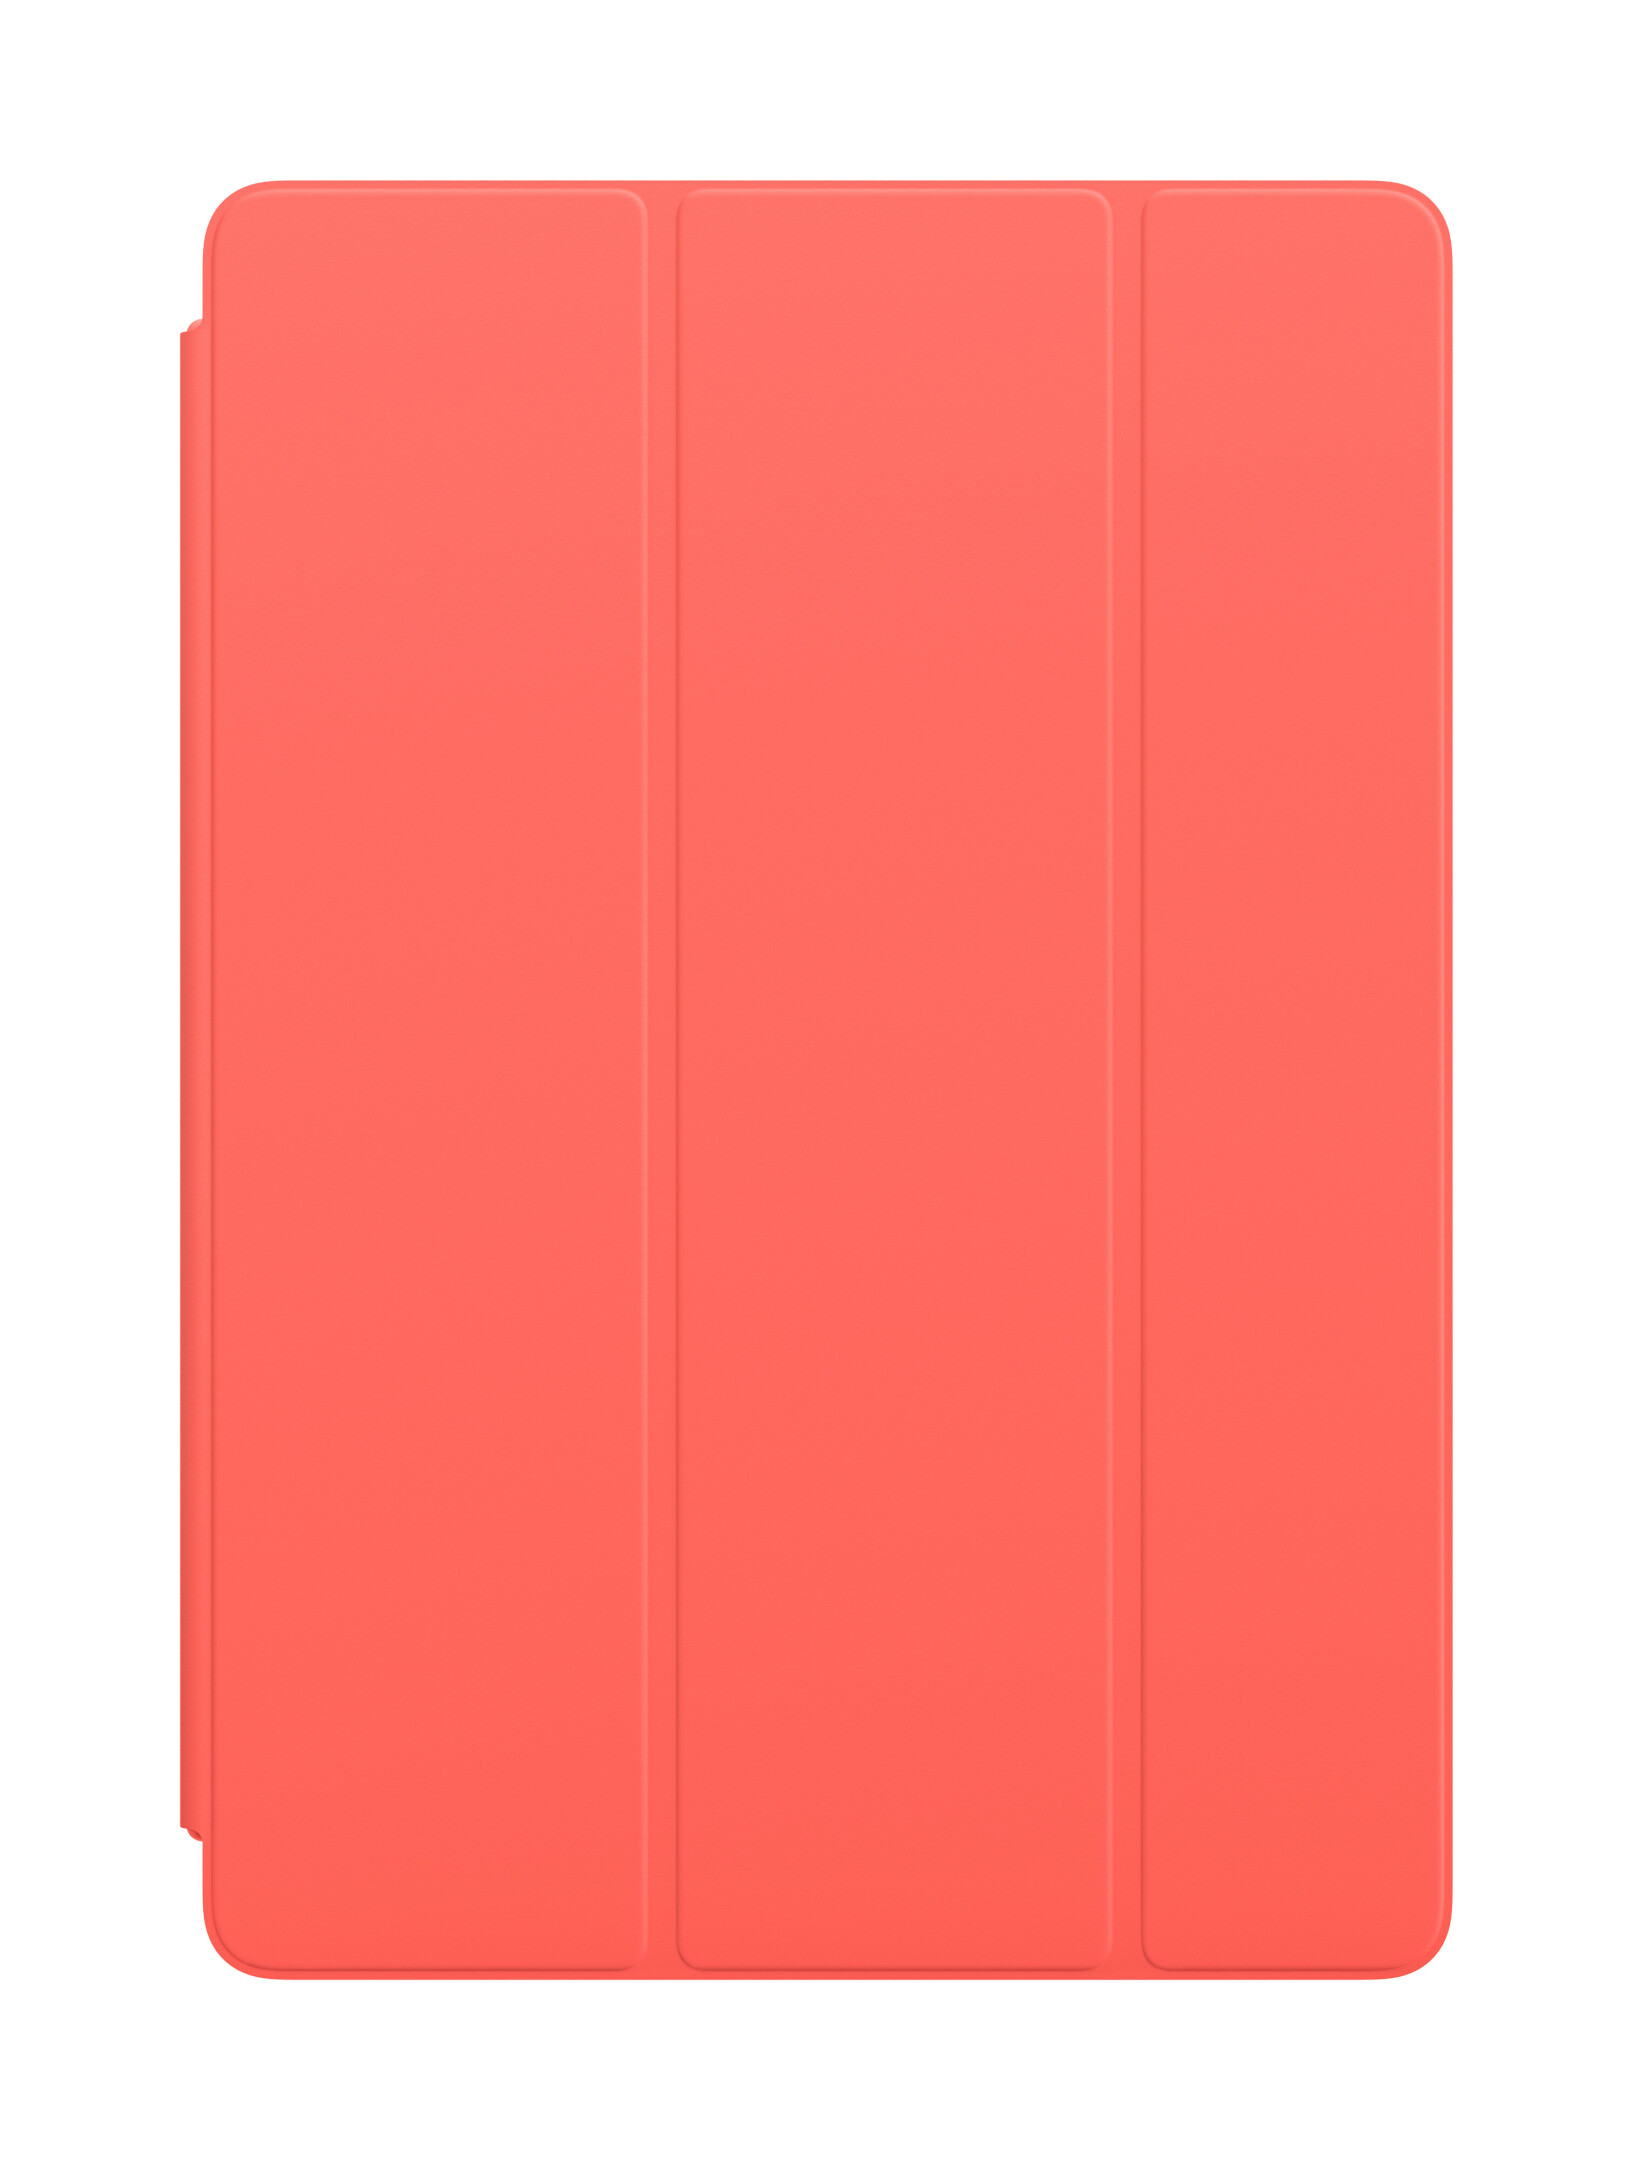 APPLE iPad mini Smart Cover - Pink Citrus